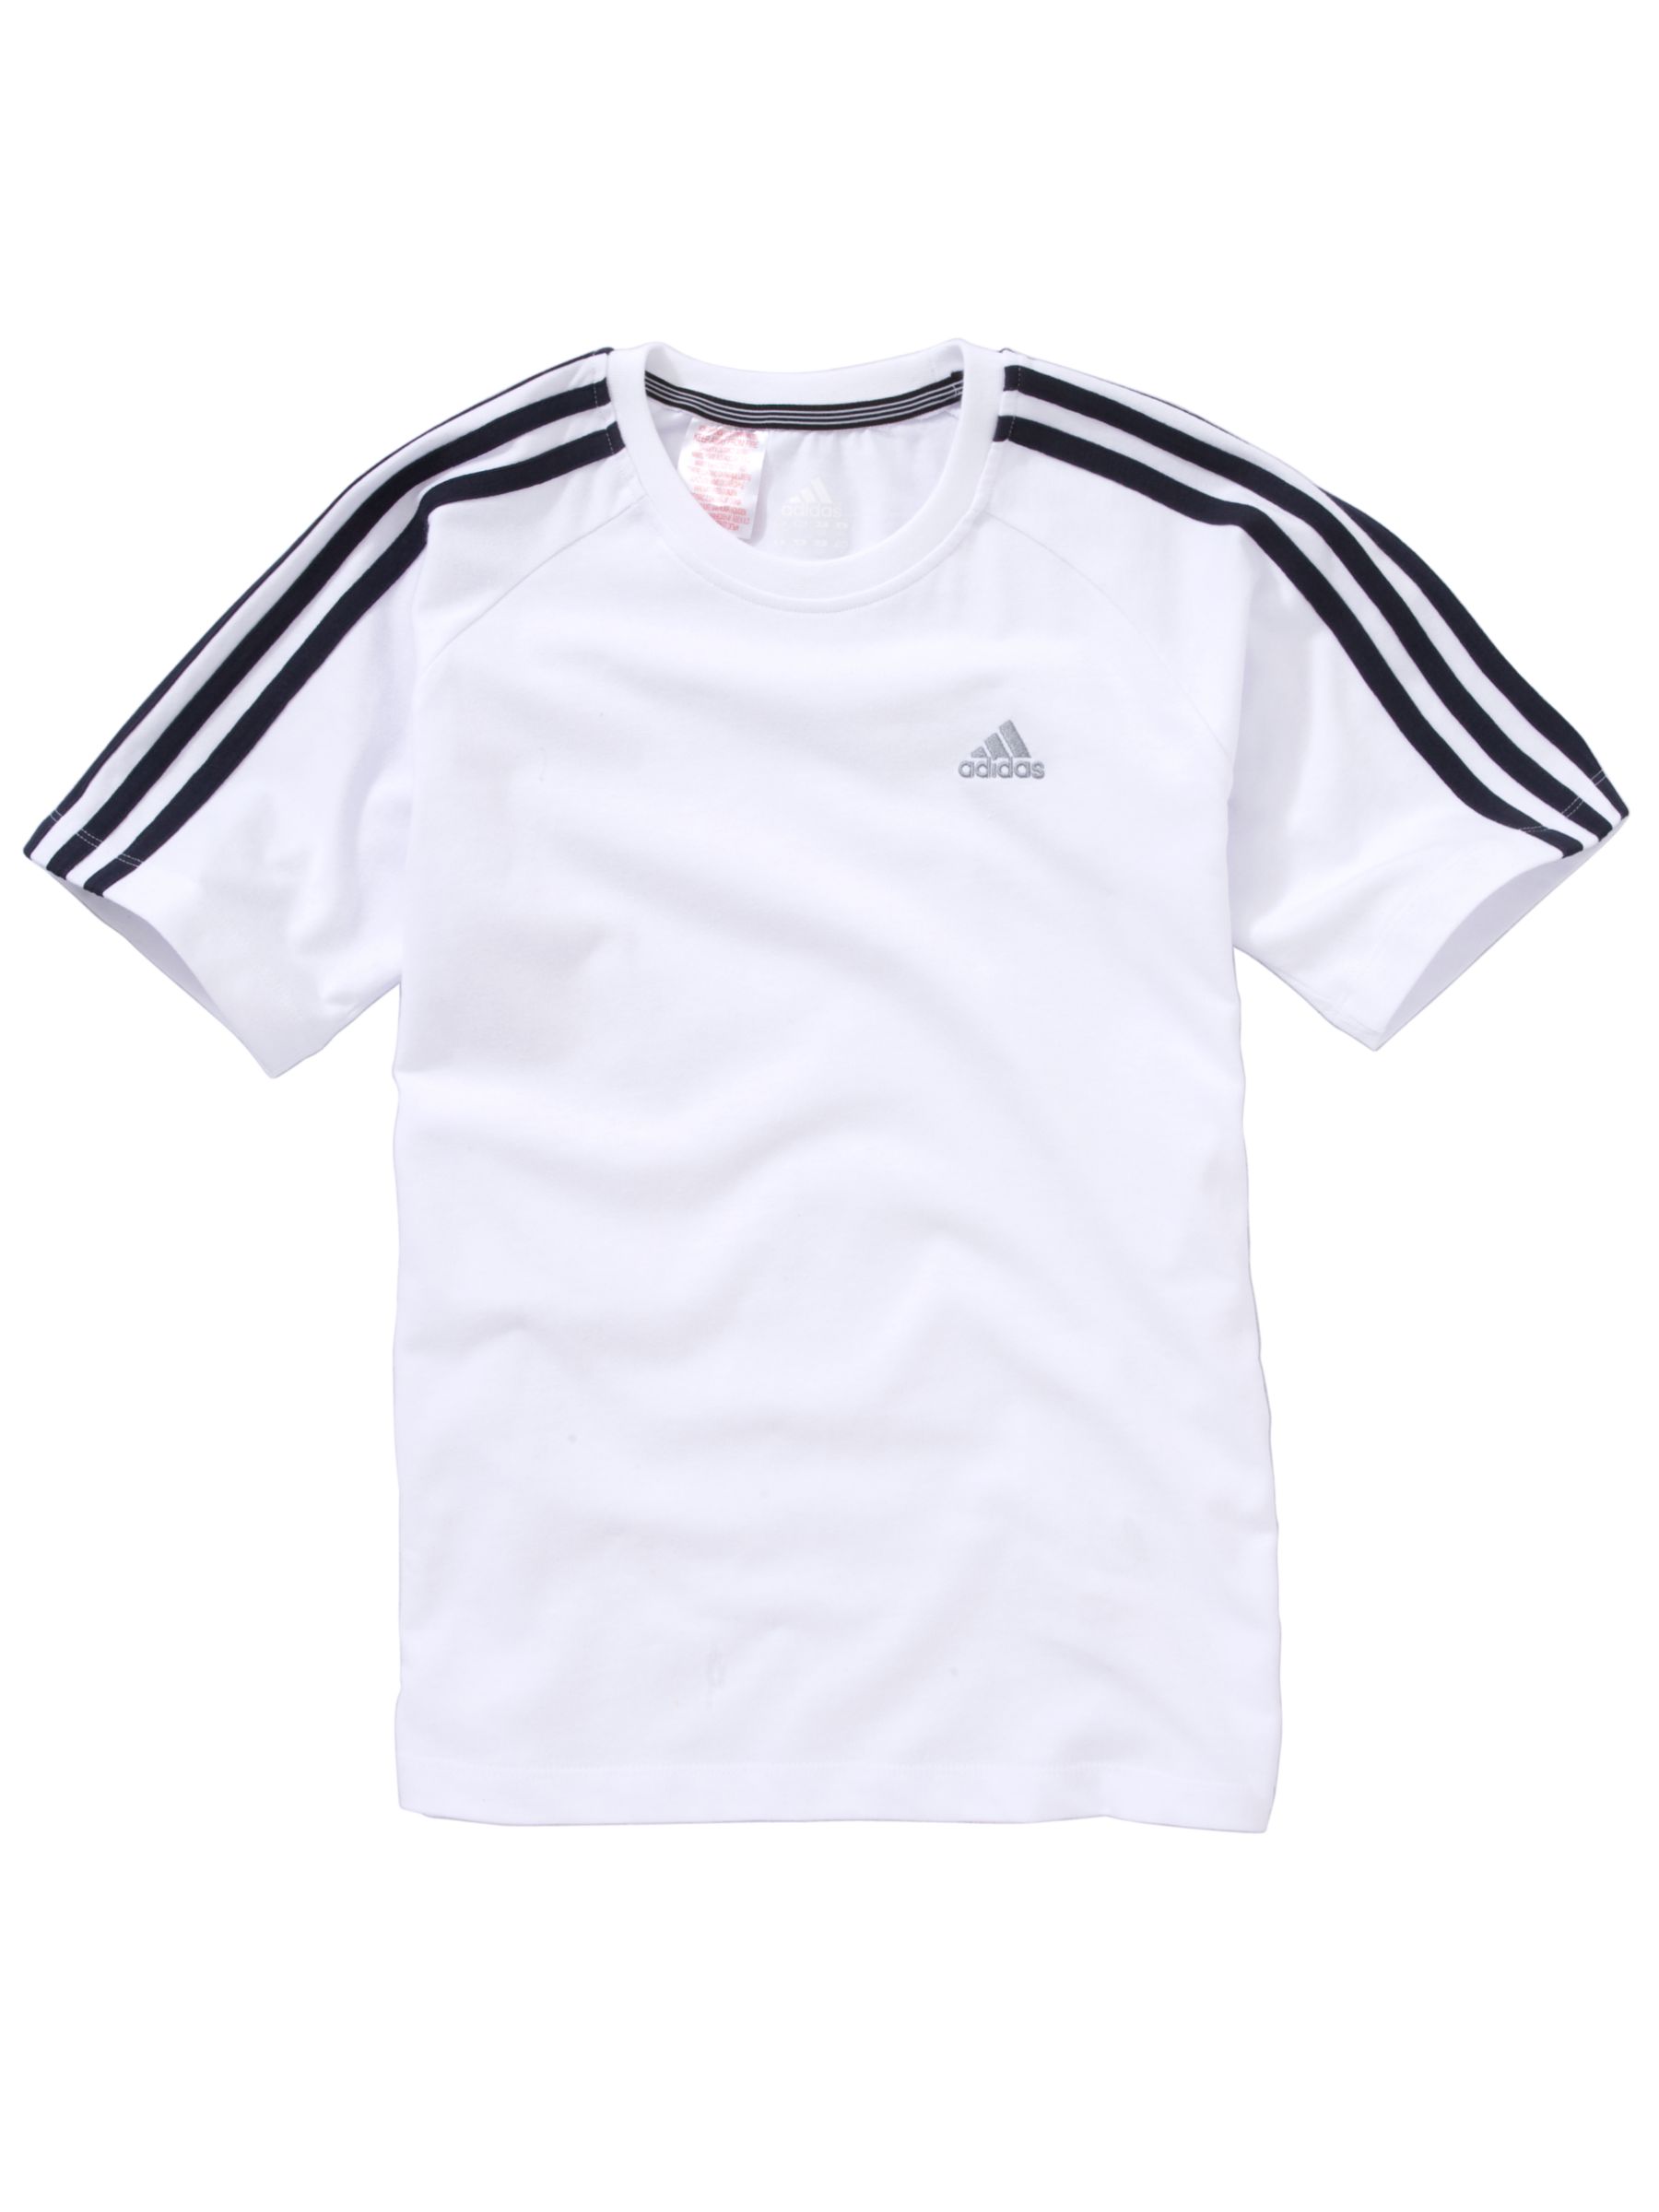 Adidas Short Sleeve T-Shirt, White/Navy